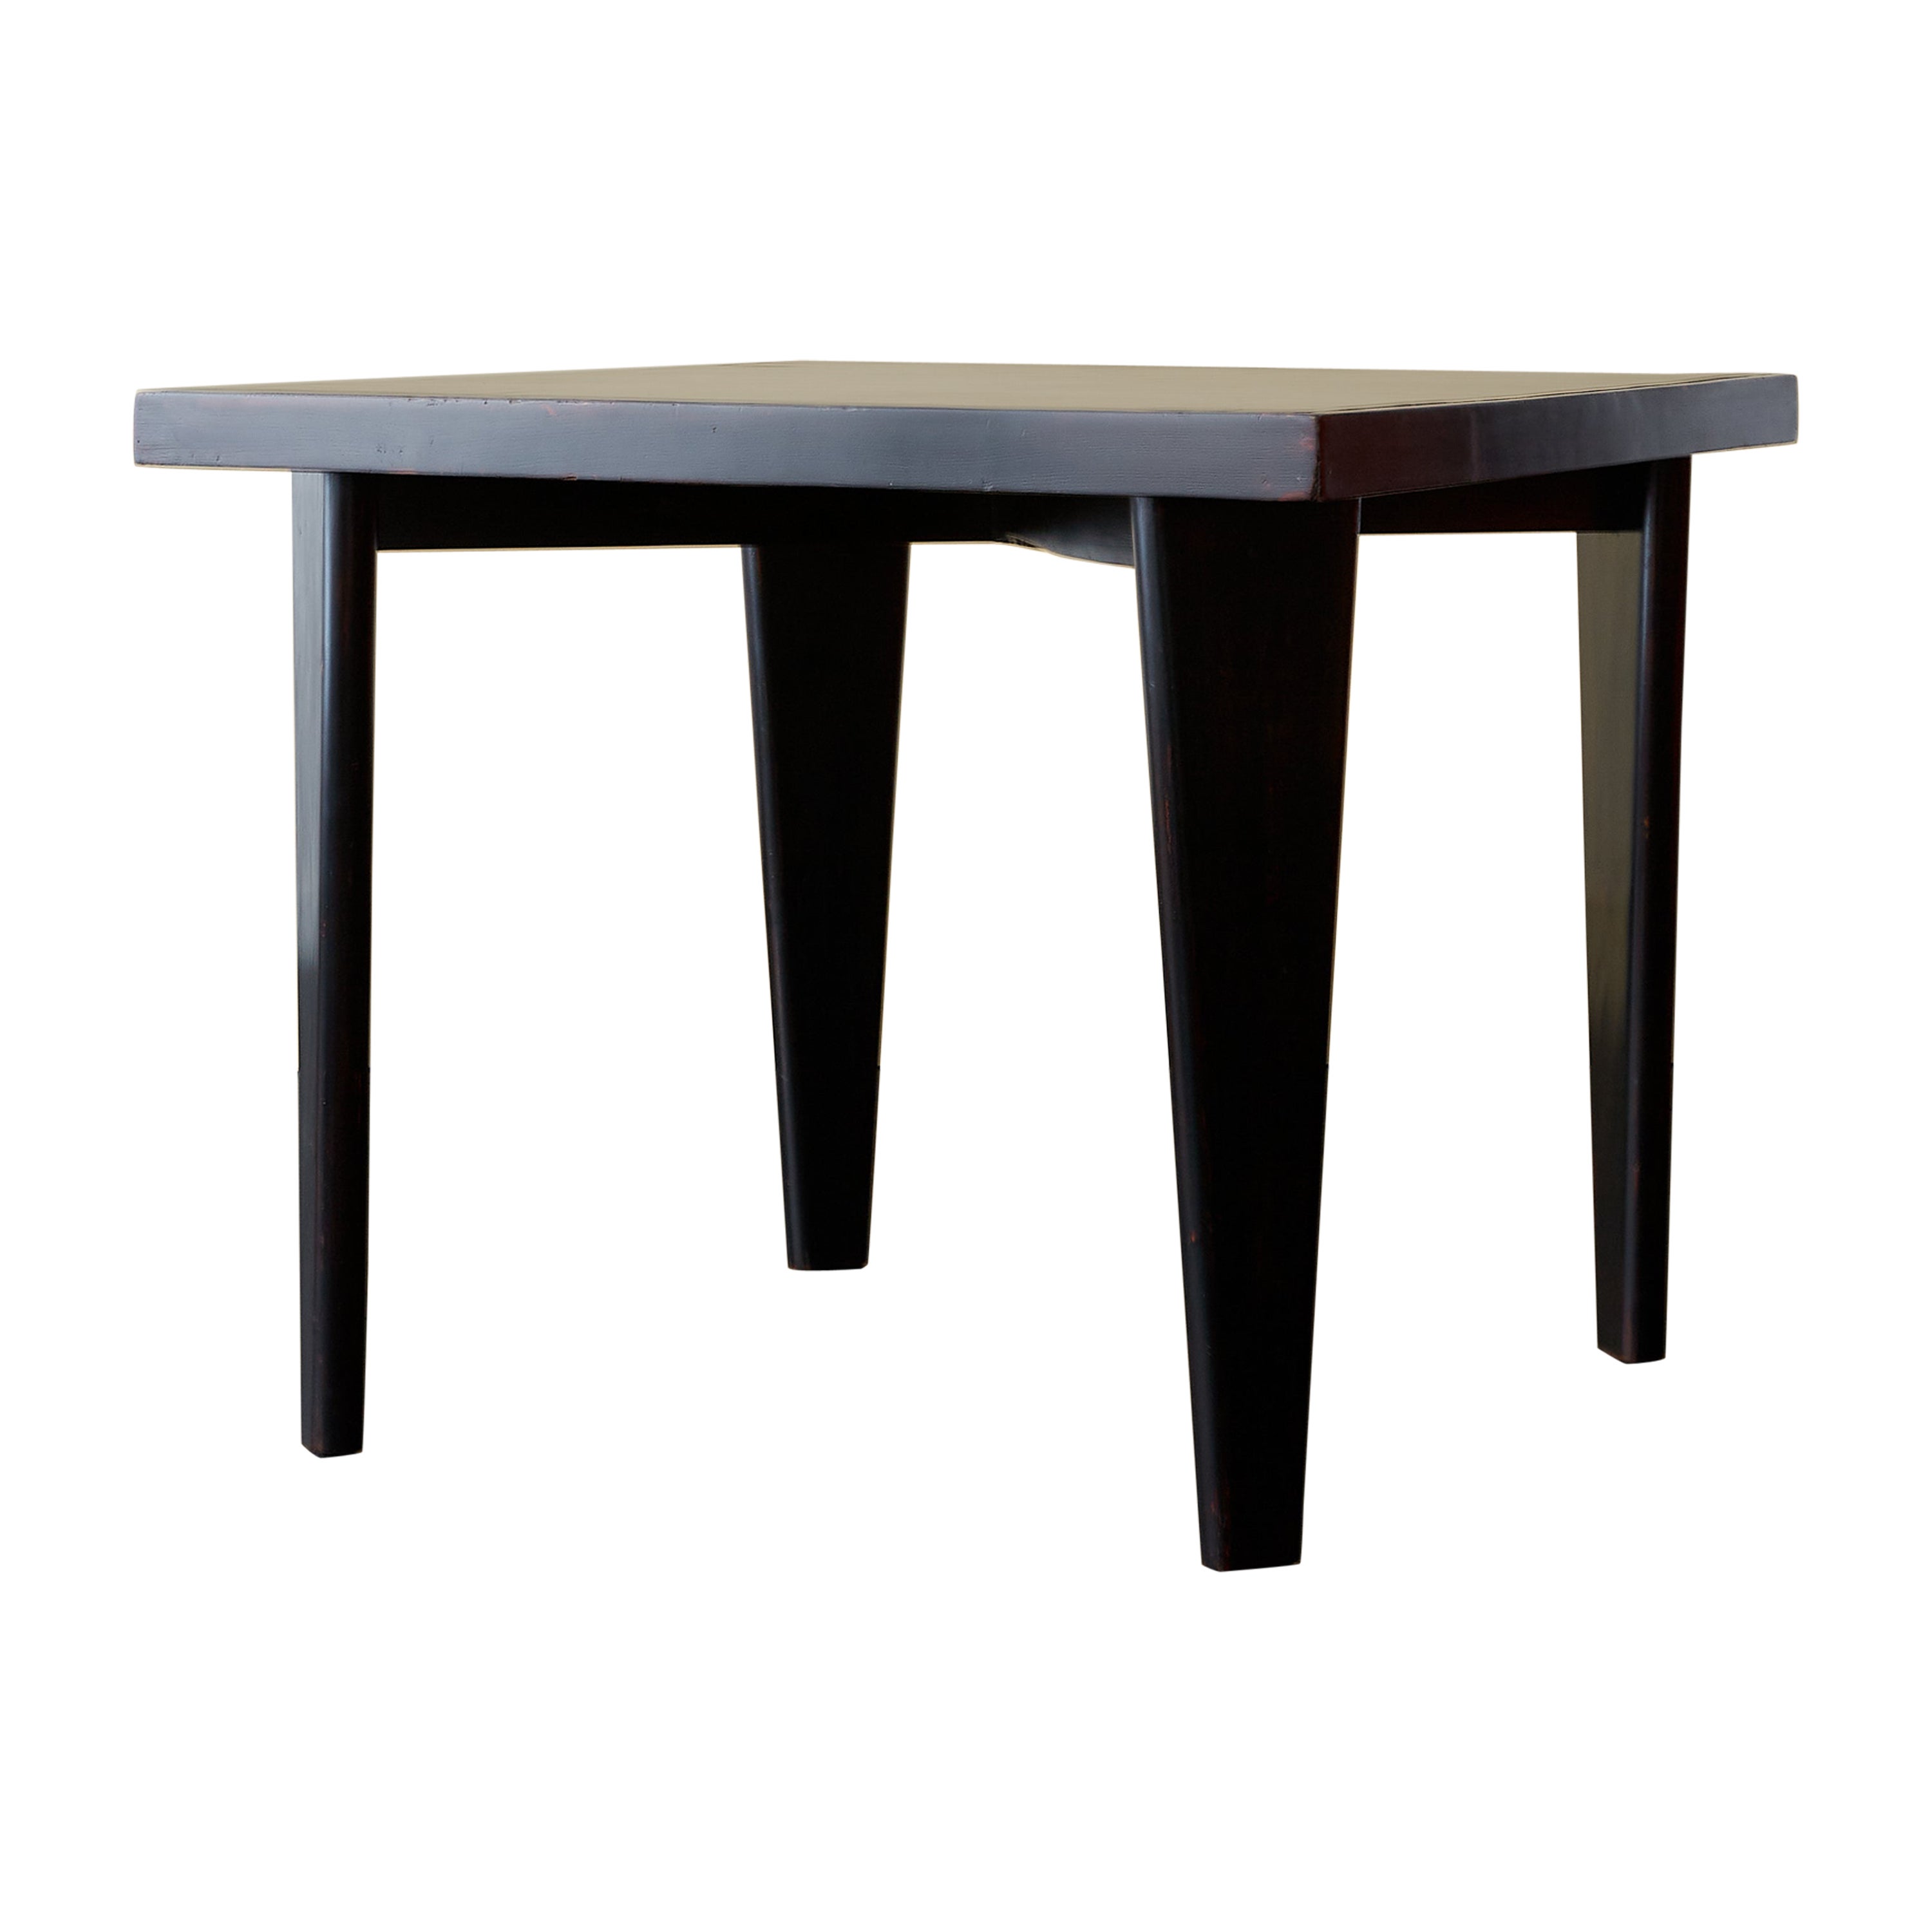 Pierre Jeanneret Square Table c. 1959. Model PJ-TA-04-A.